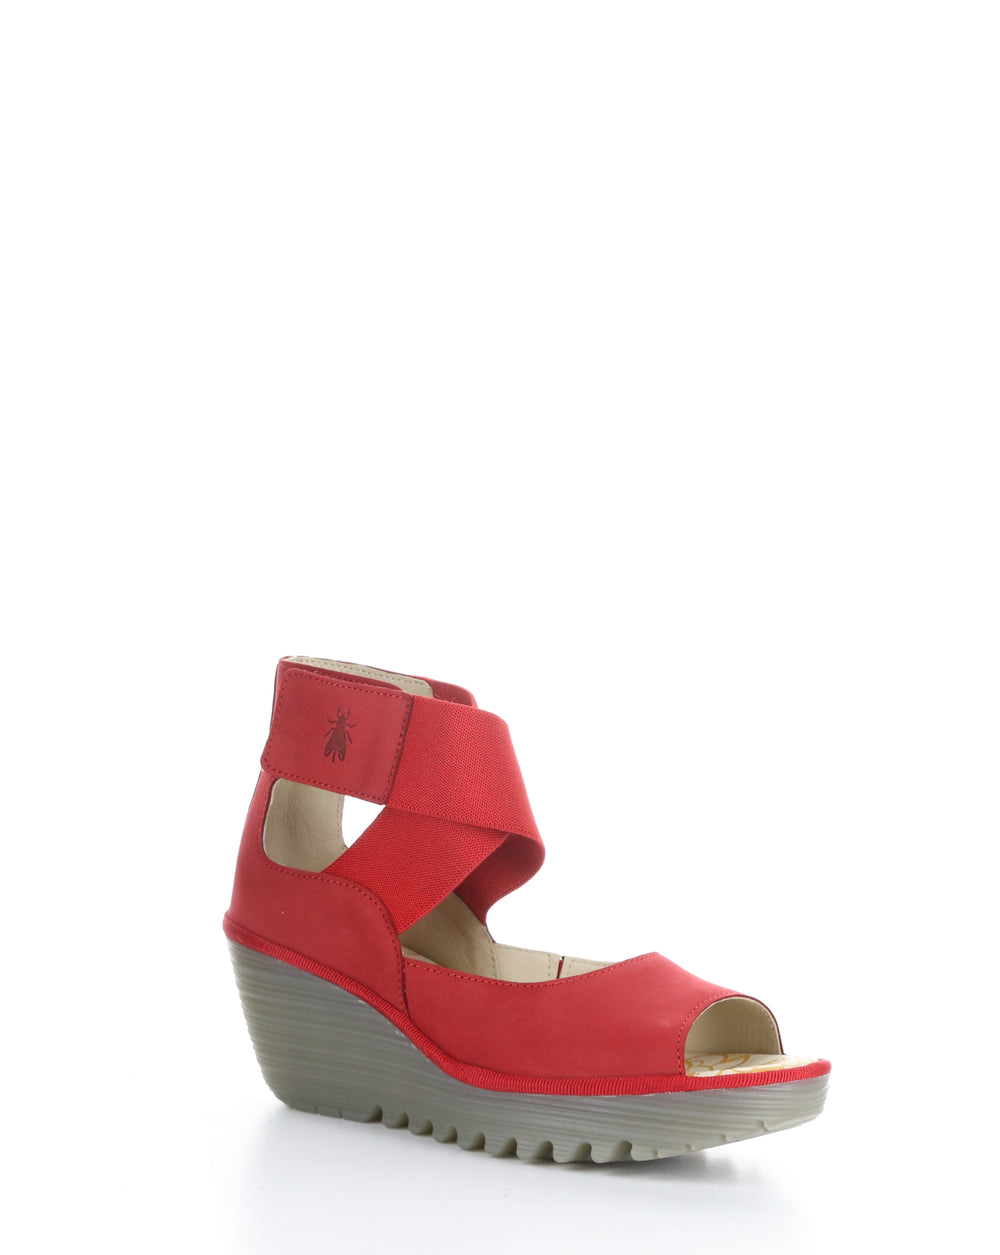 YEFI473FLY Red Velcro Sandals